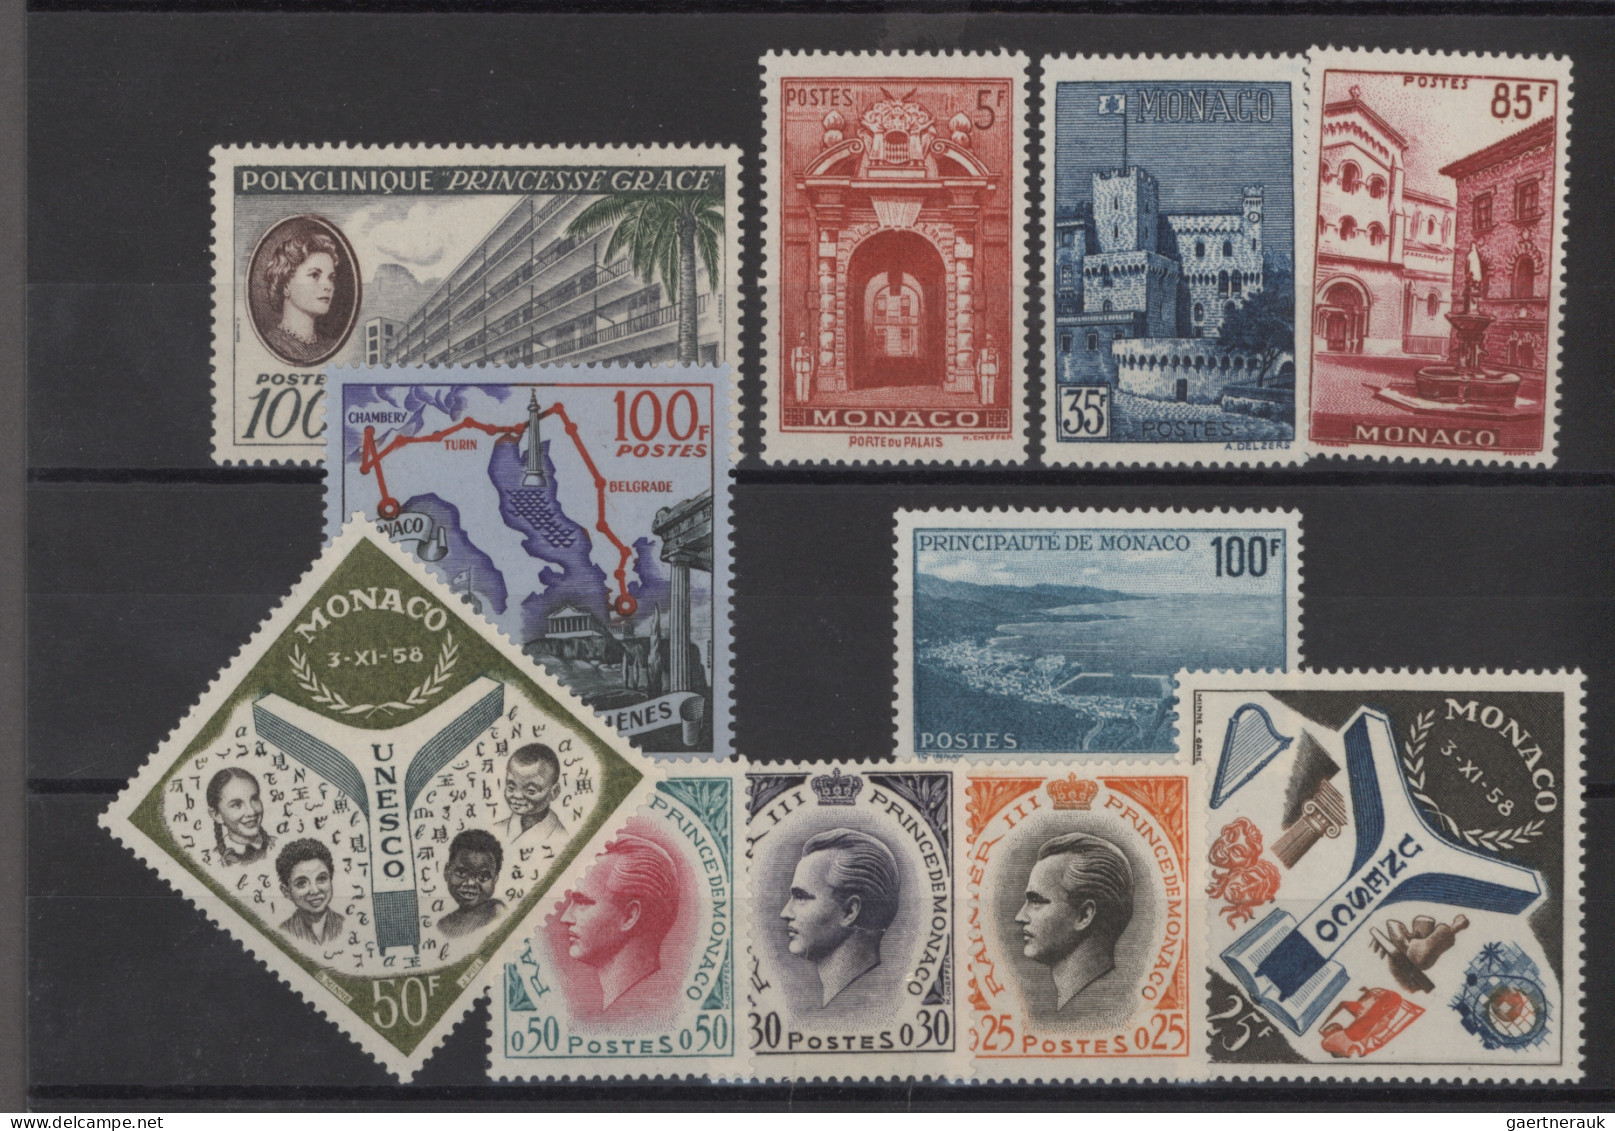 Monaco: 1937/2000 great variety of souvenir sheets, Mi. No.1-4b , also some attr